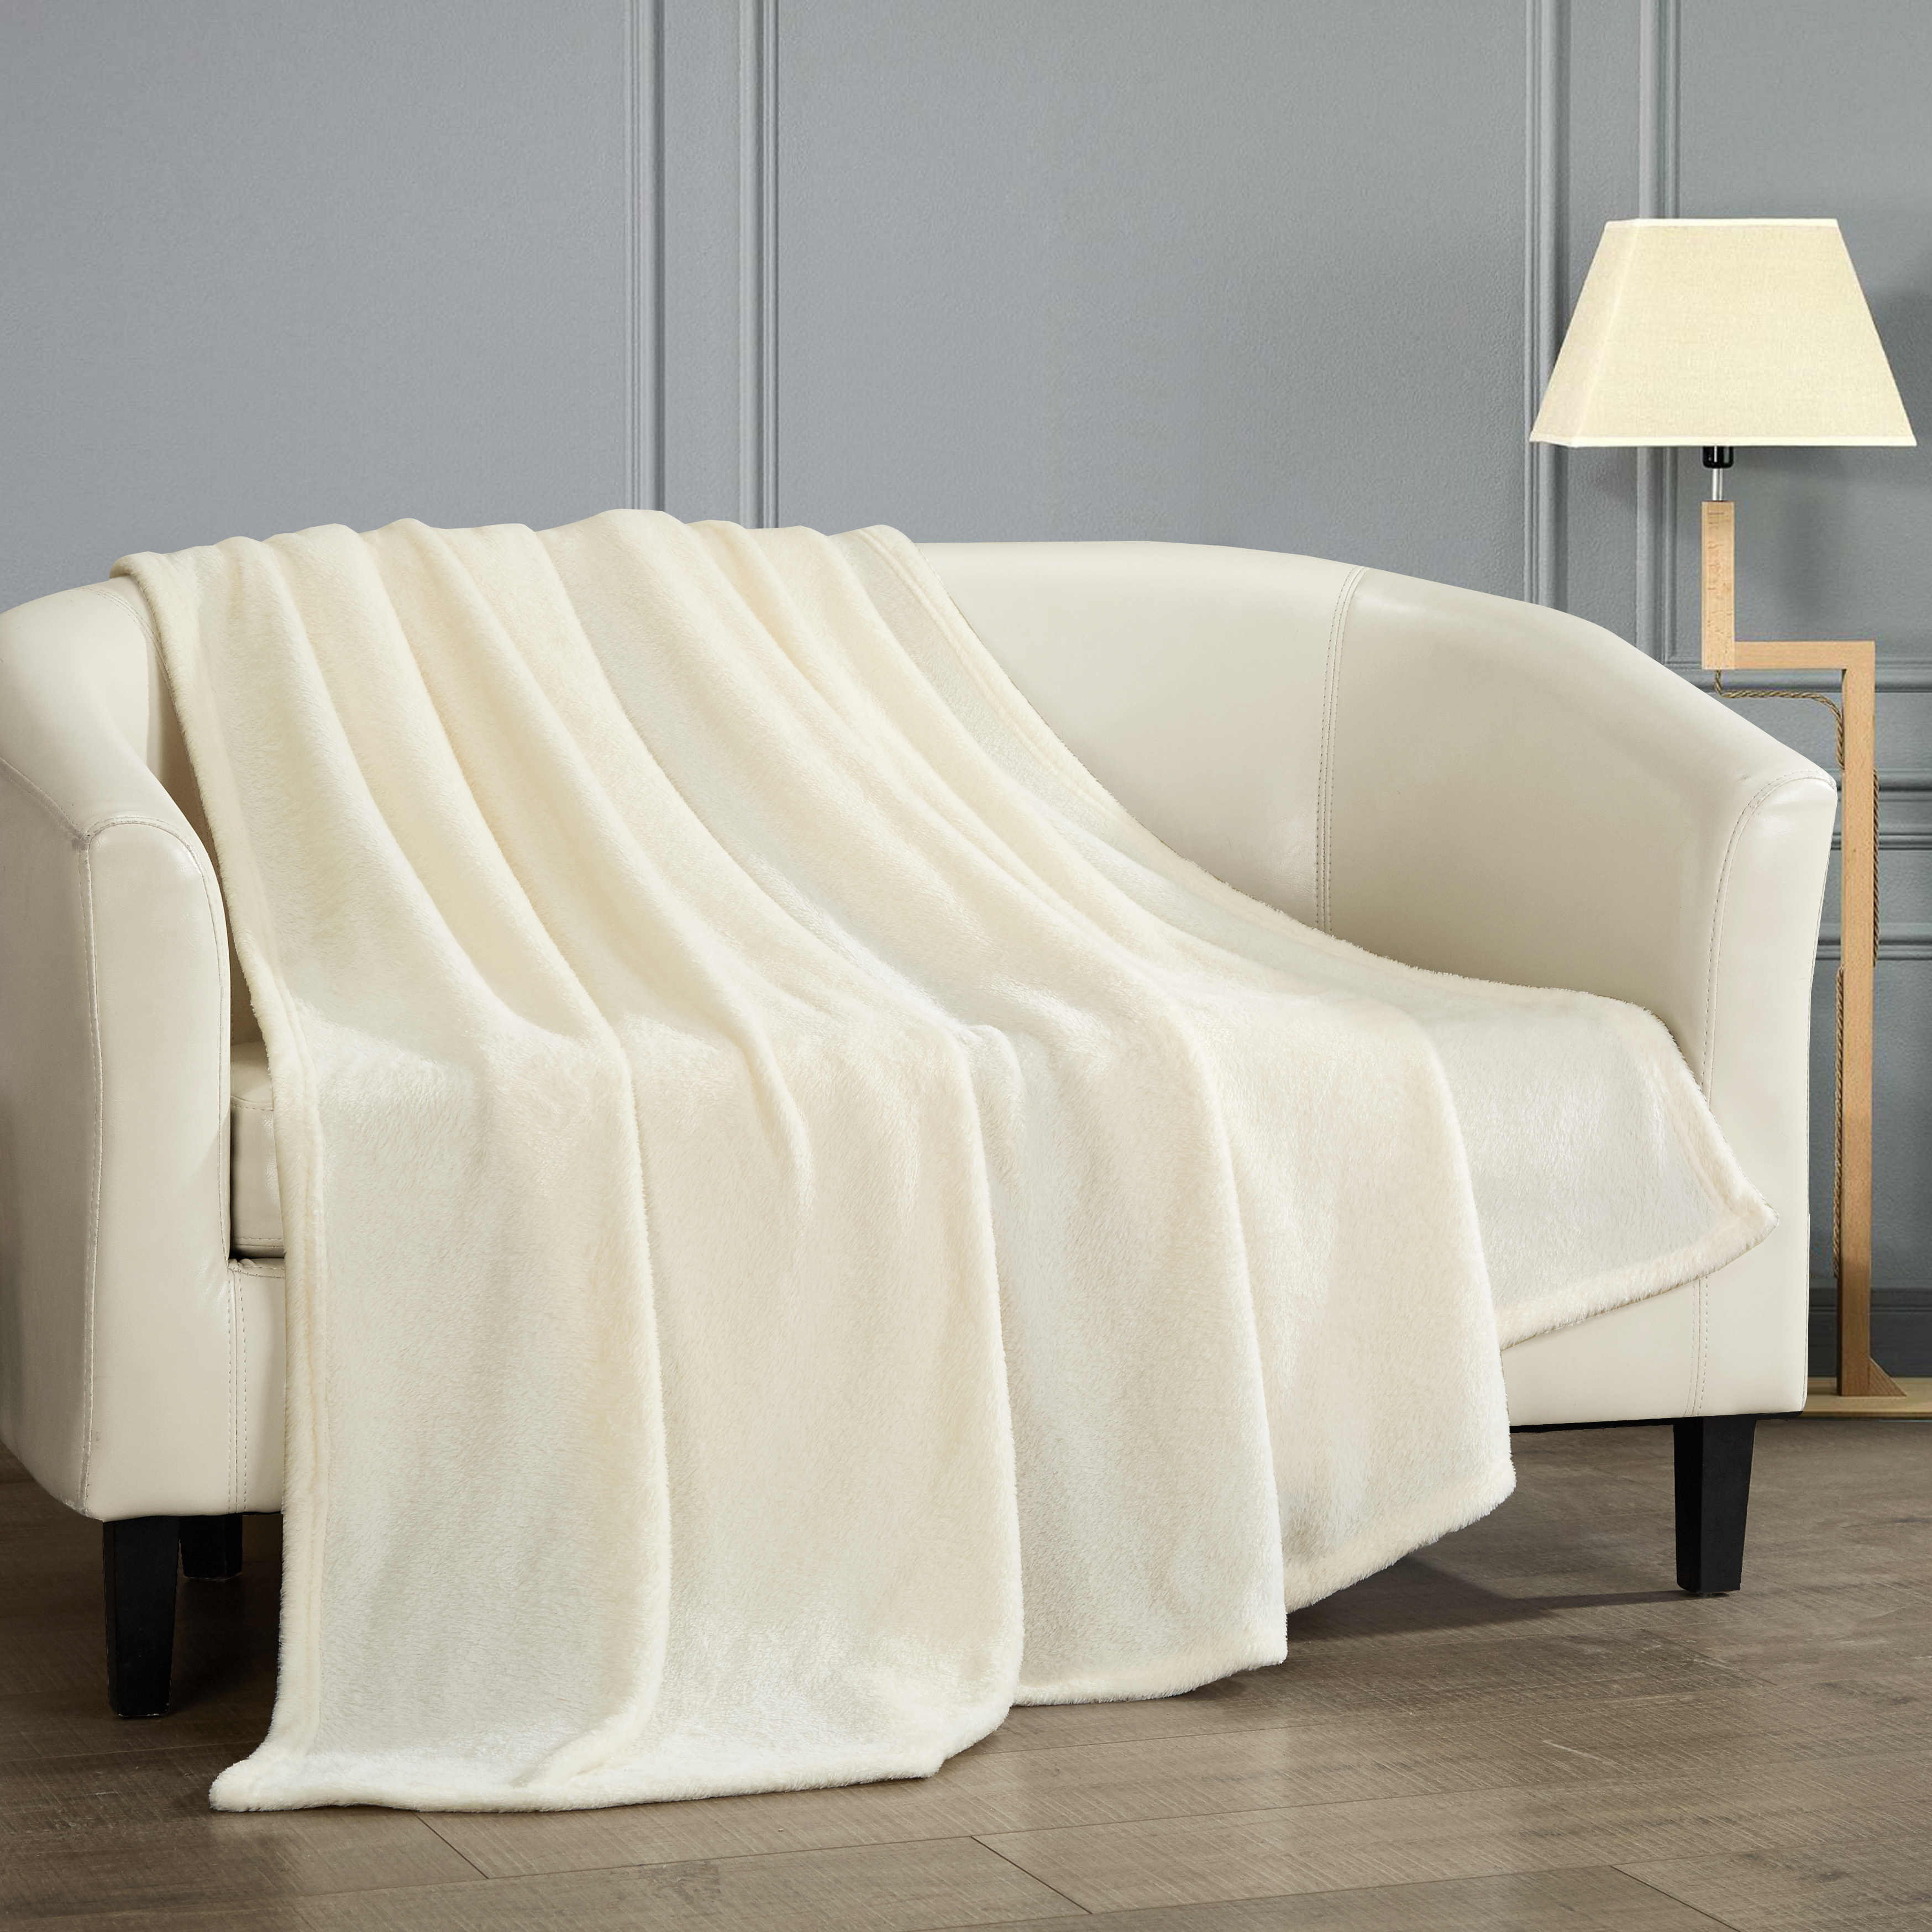 Kaeden Throw Blanket Cozy Super Soft Ultra Plush Micro Mink Fleece Decorative Design - Camel